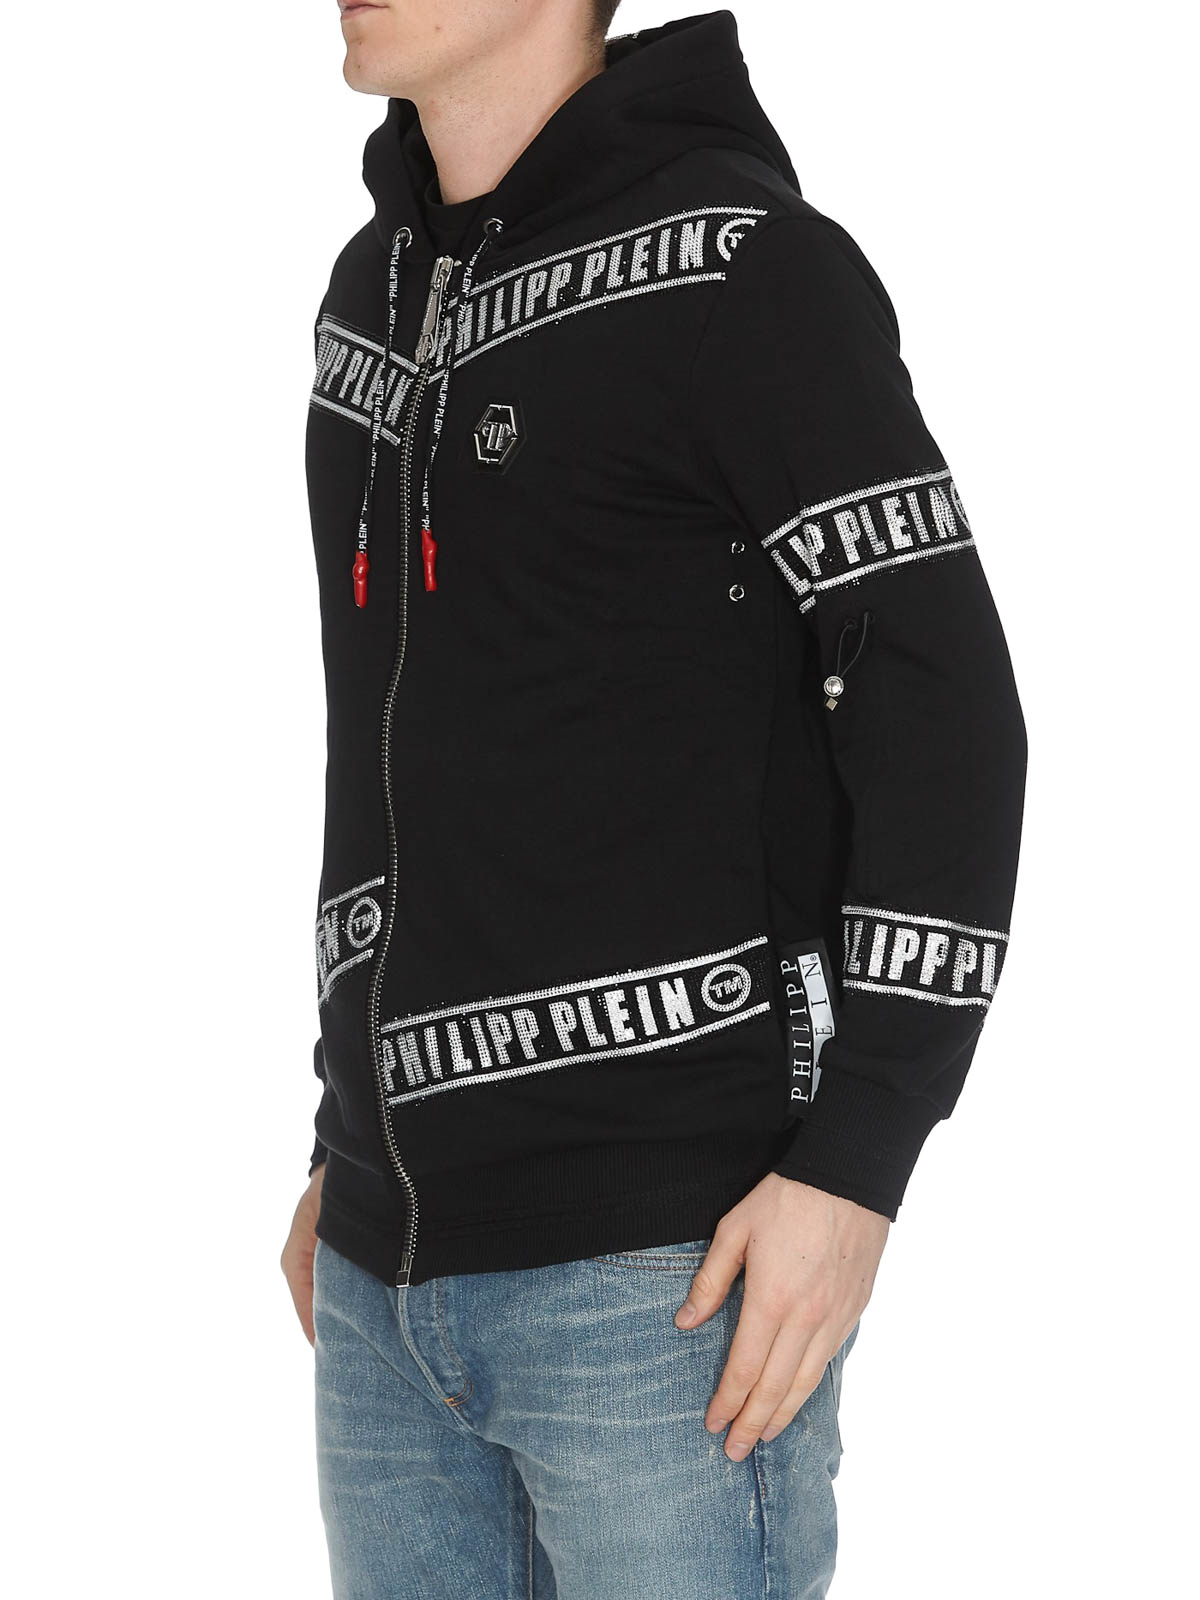 philipp plein black hoodie